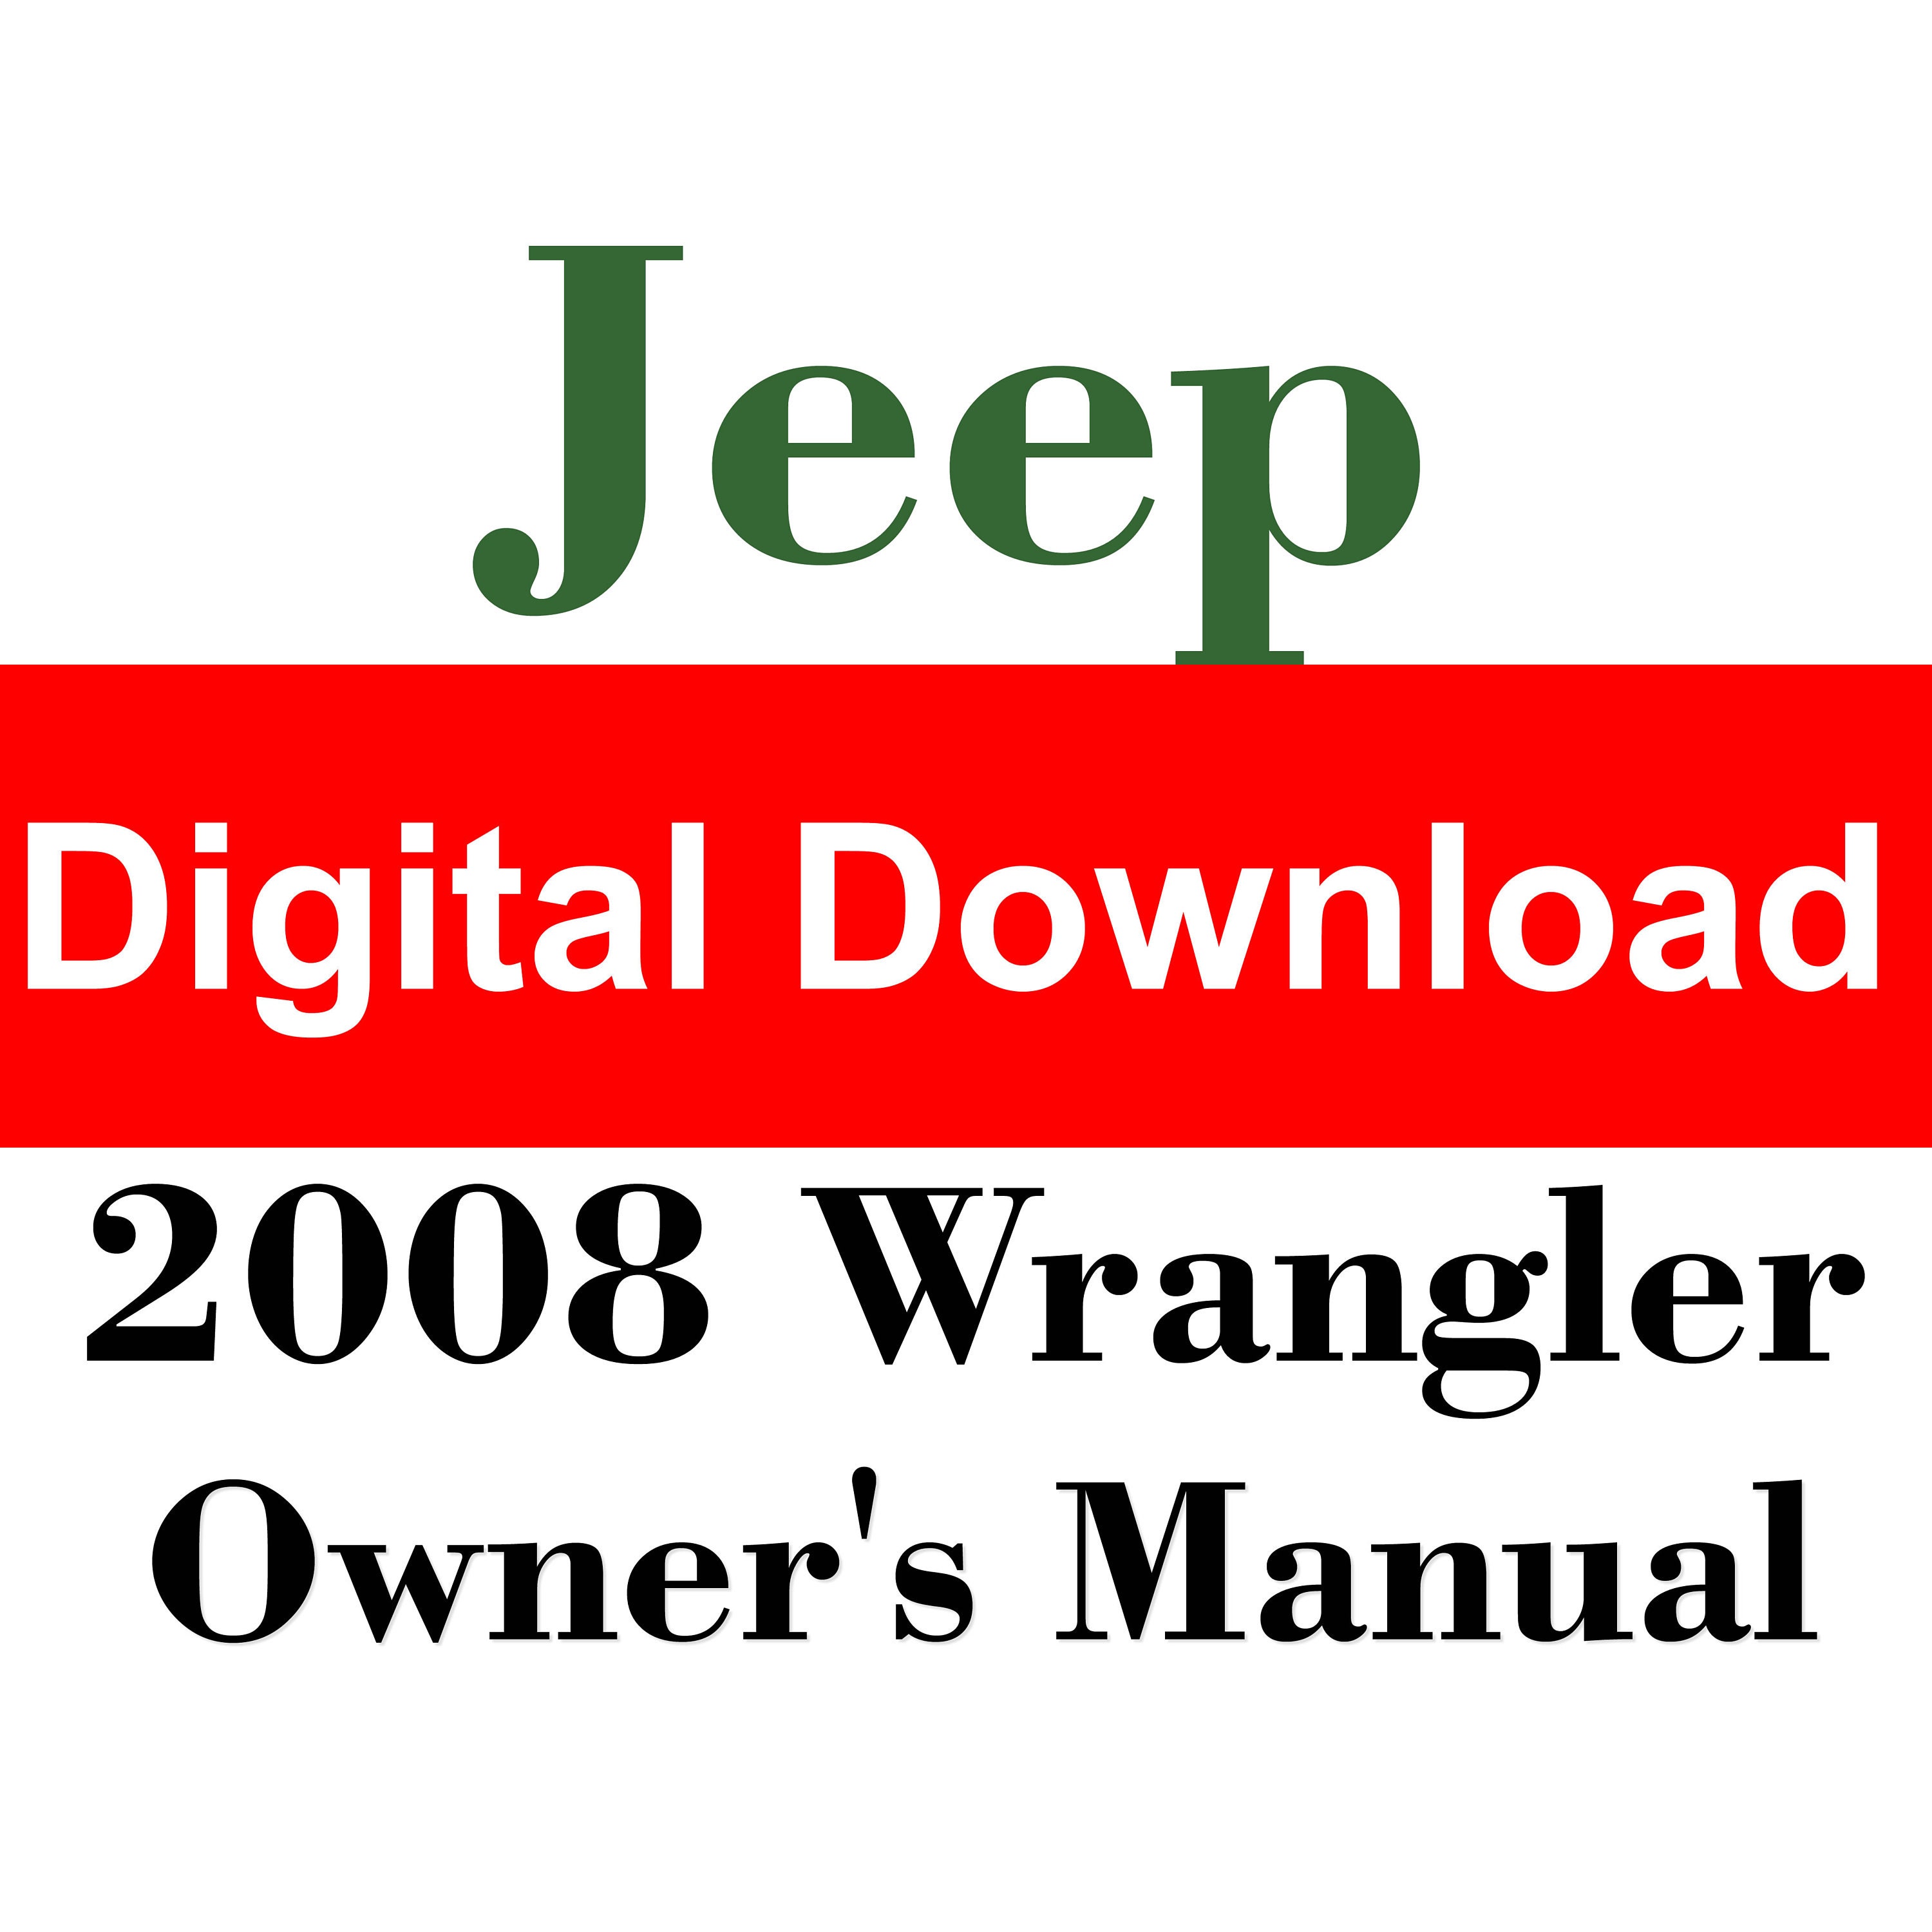 2008 Jeep Wrangler Owners Manual PDF Digital Download - Etsy